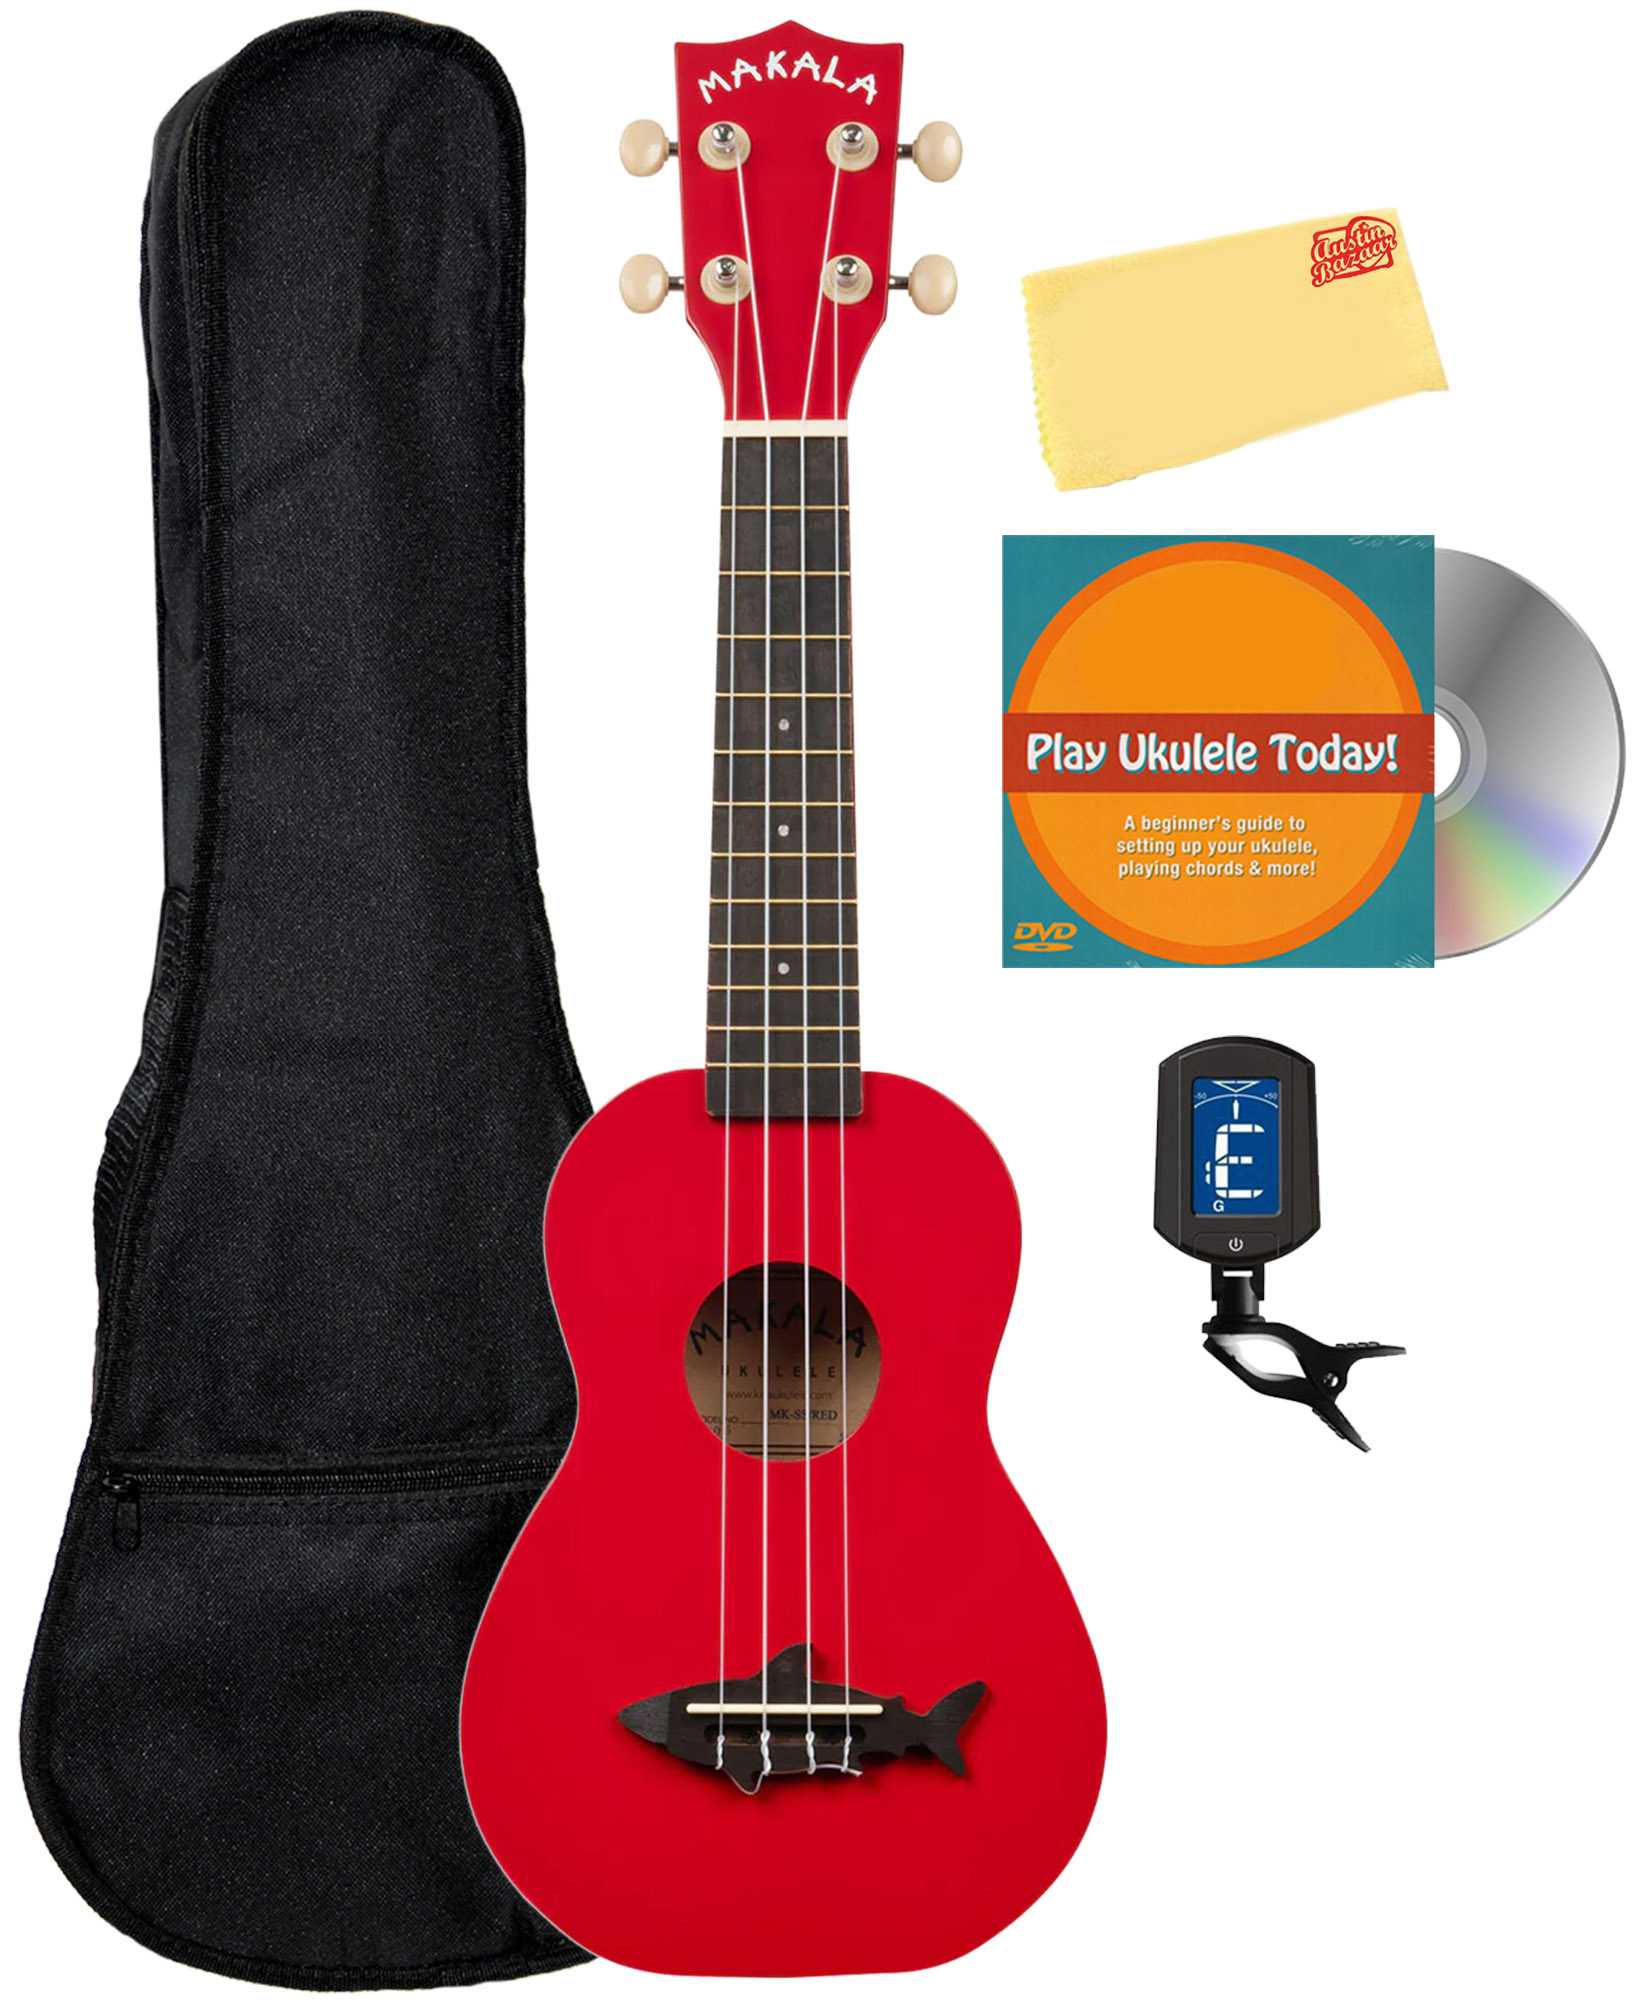 kala makala soprano ukulele with shark bridge warranty